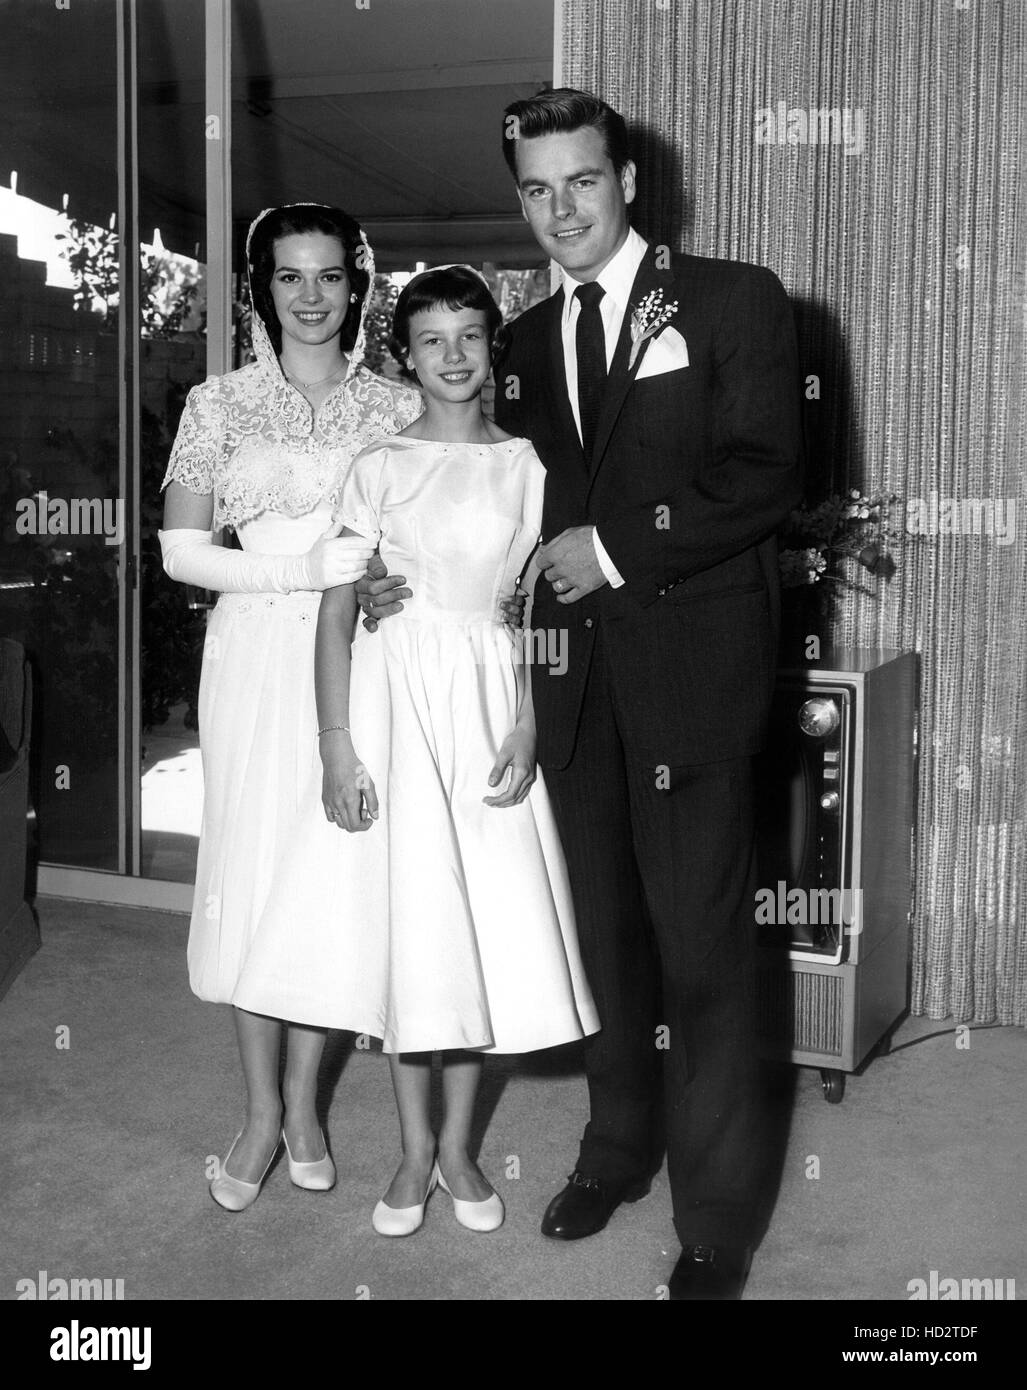 Natalie Wood, with sister Lana Wood, Robert Wagner, 1957 Stock Photo - Alamy